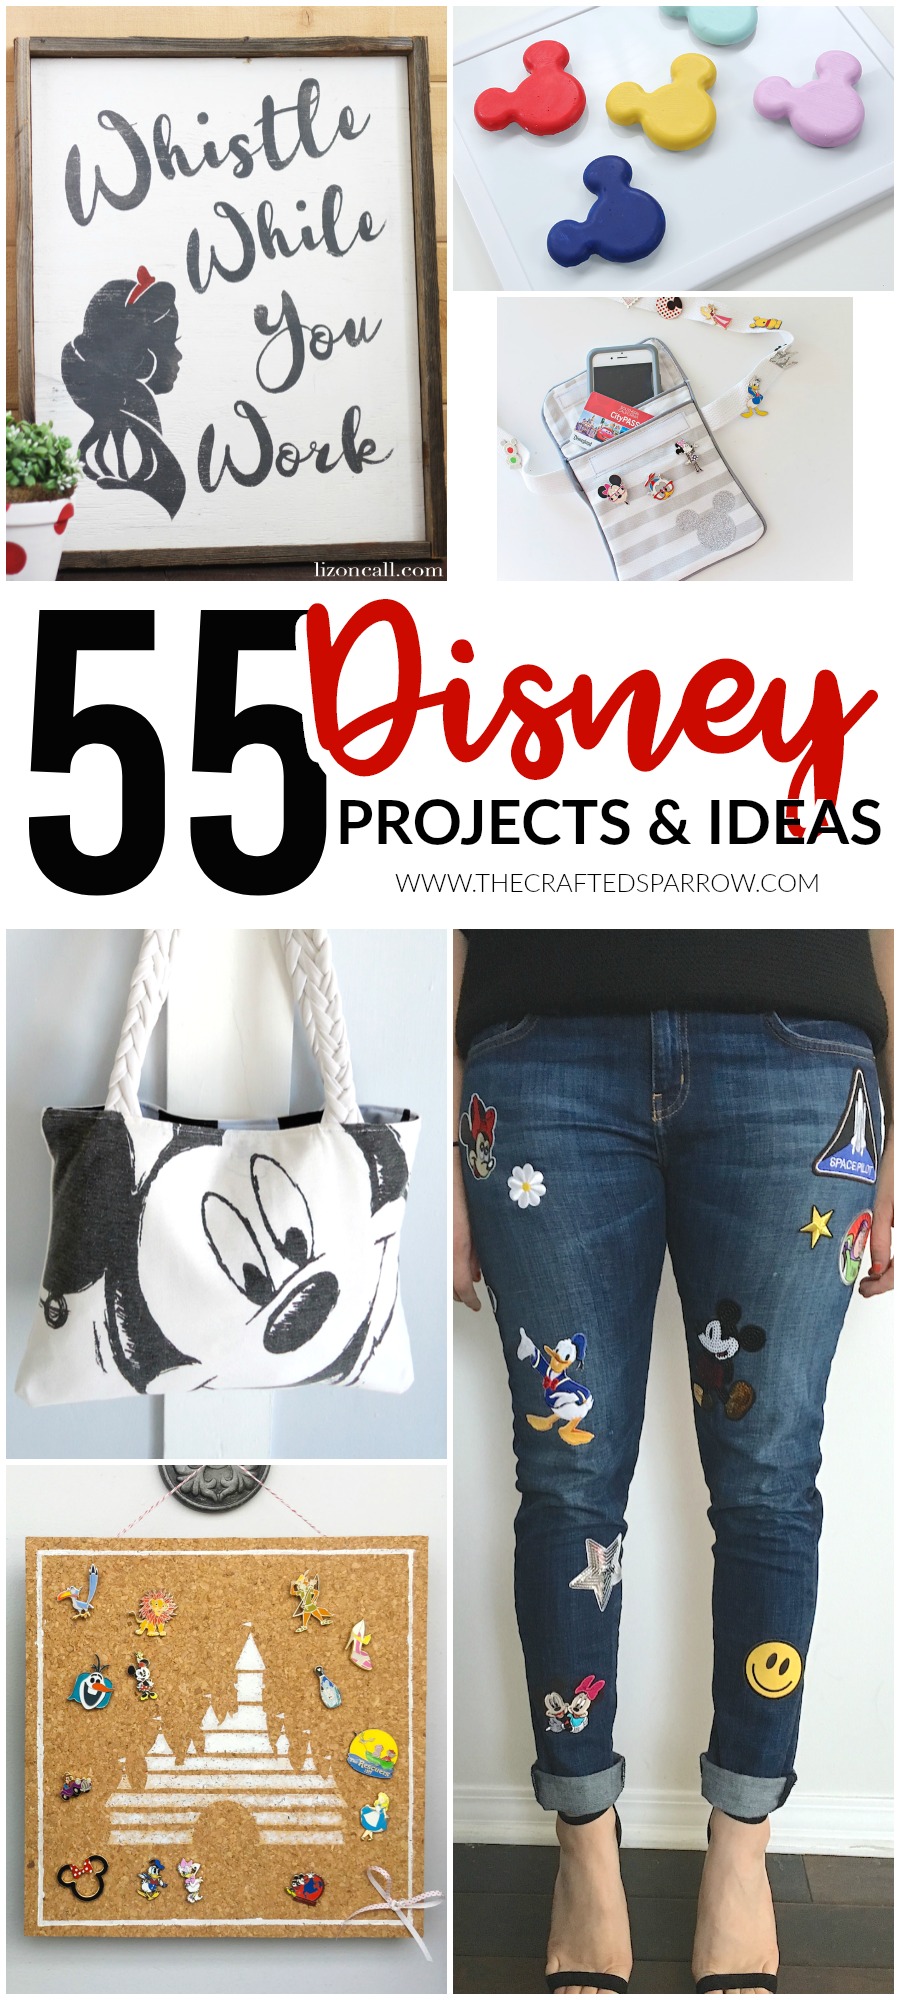 https://www.thecraftedsparrow.com/wp-content/uploads/2017/07/55-Disney-Projects-Ideas.jpg